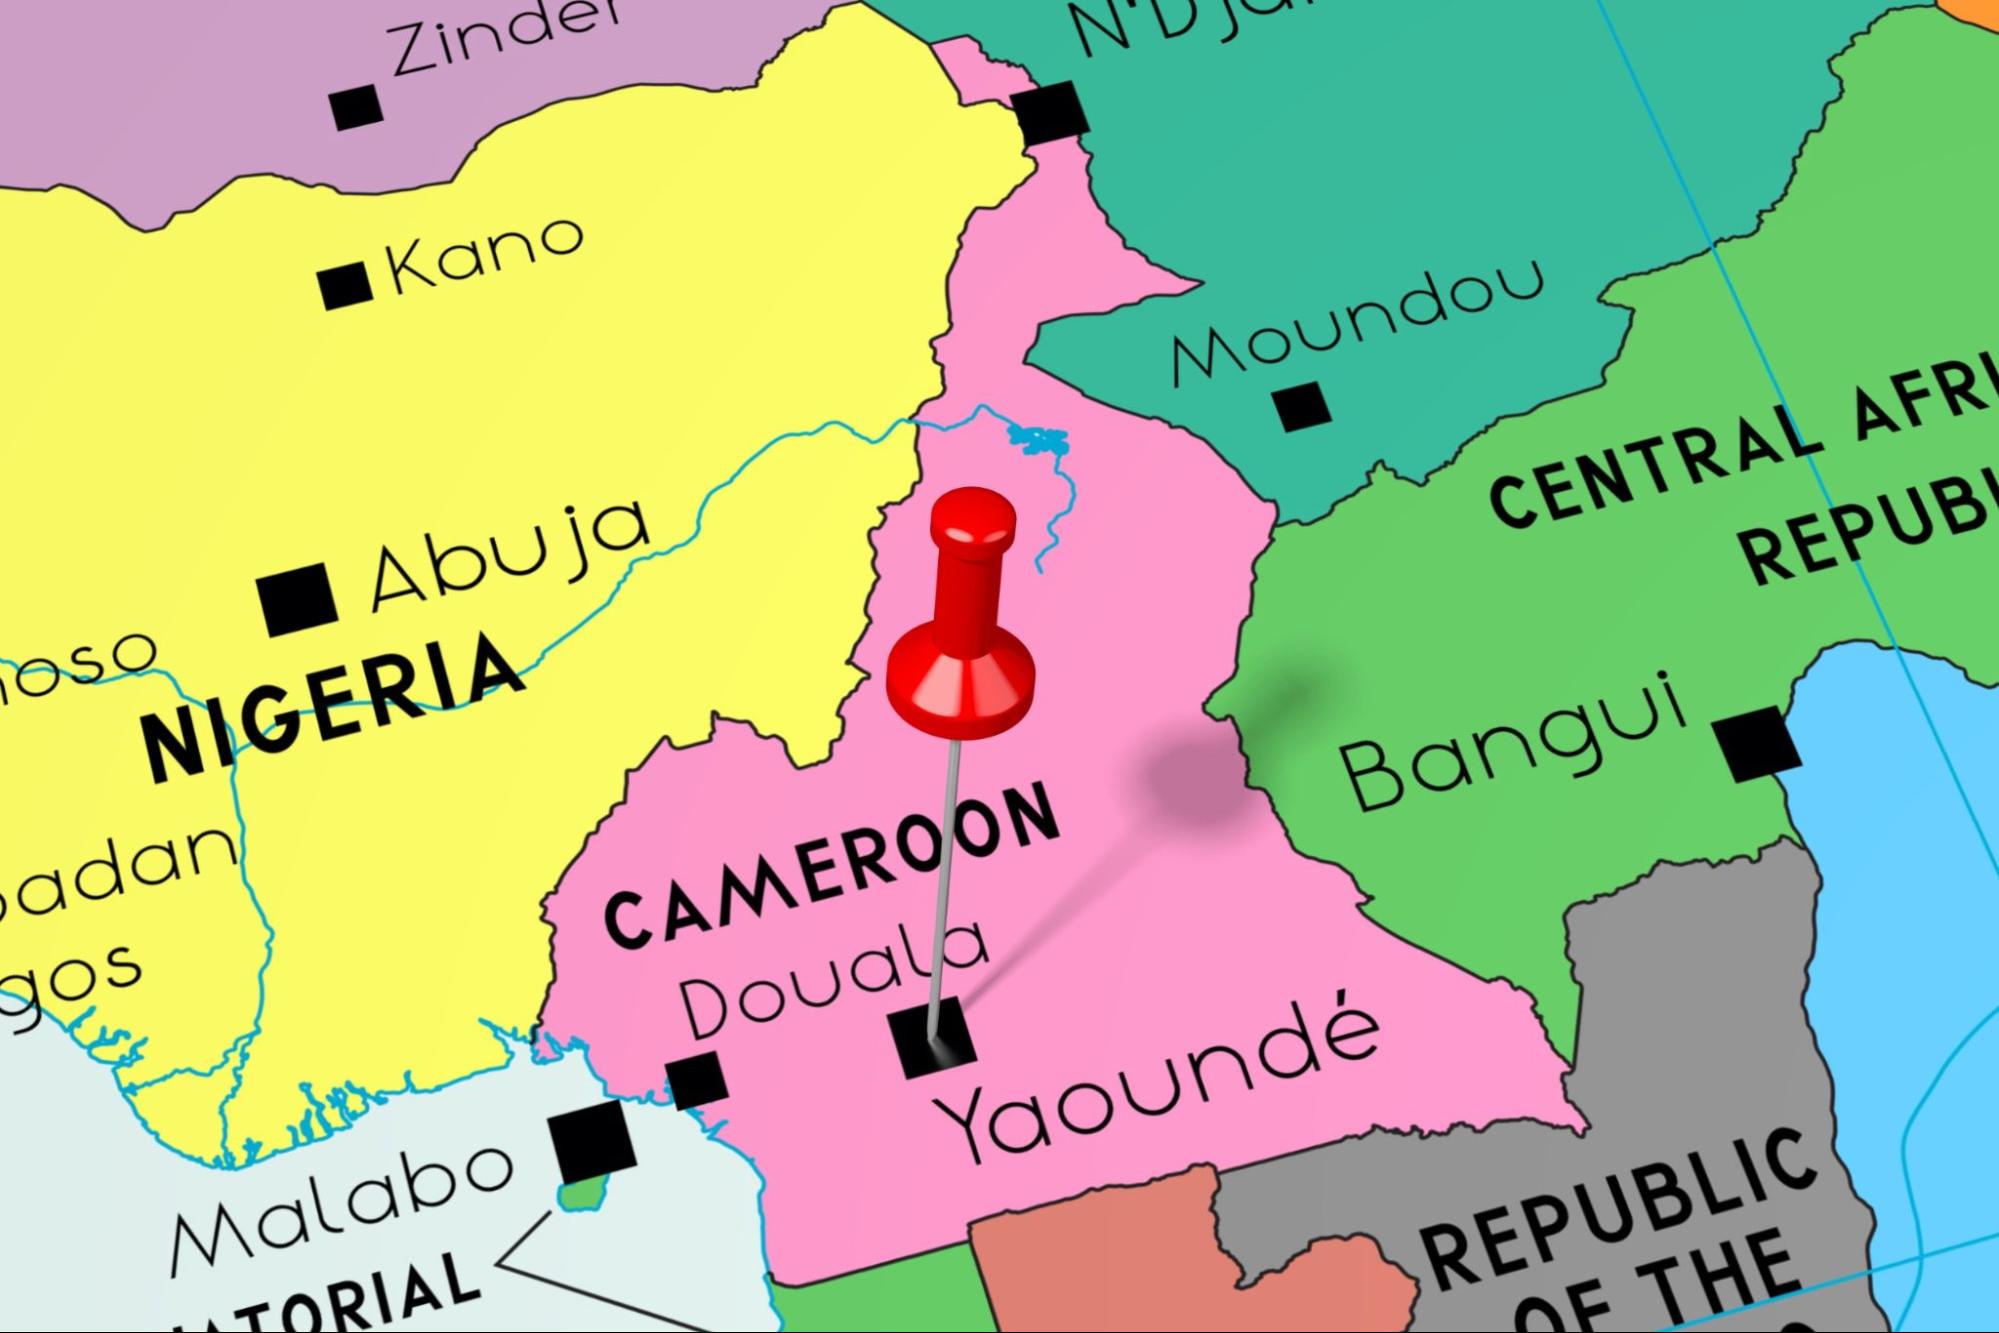 Cameroon, Yaounde - capital city